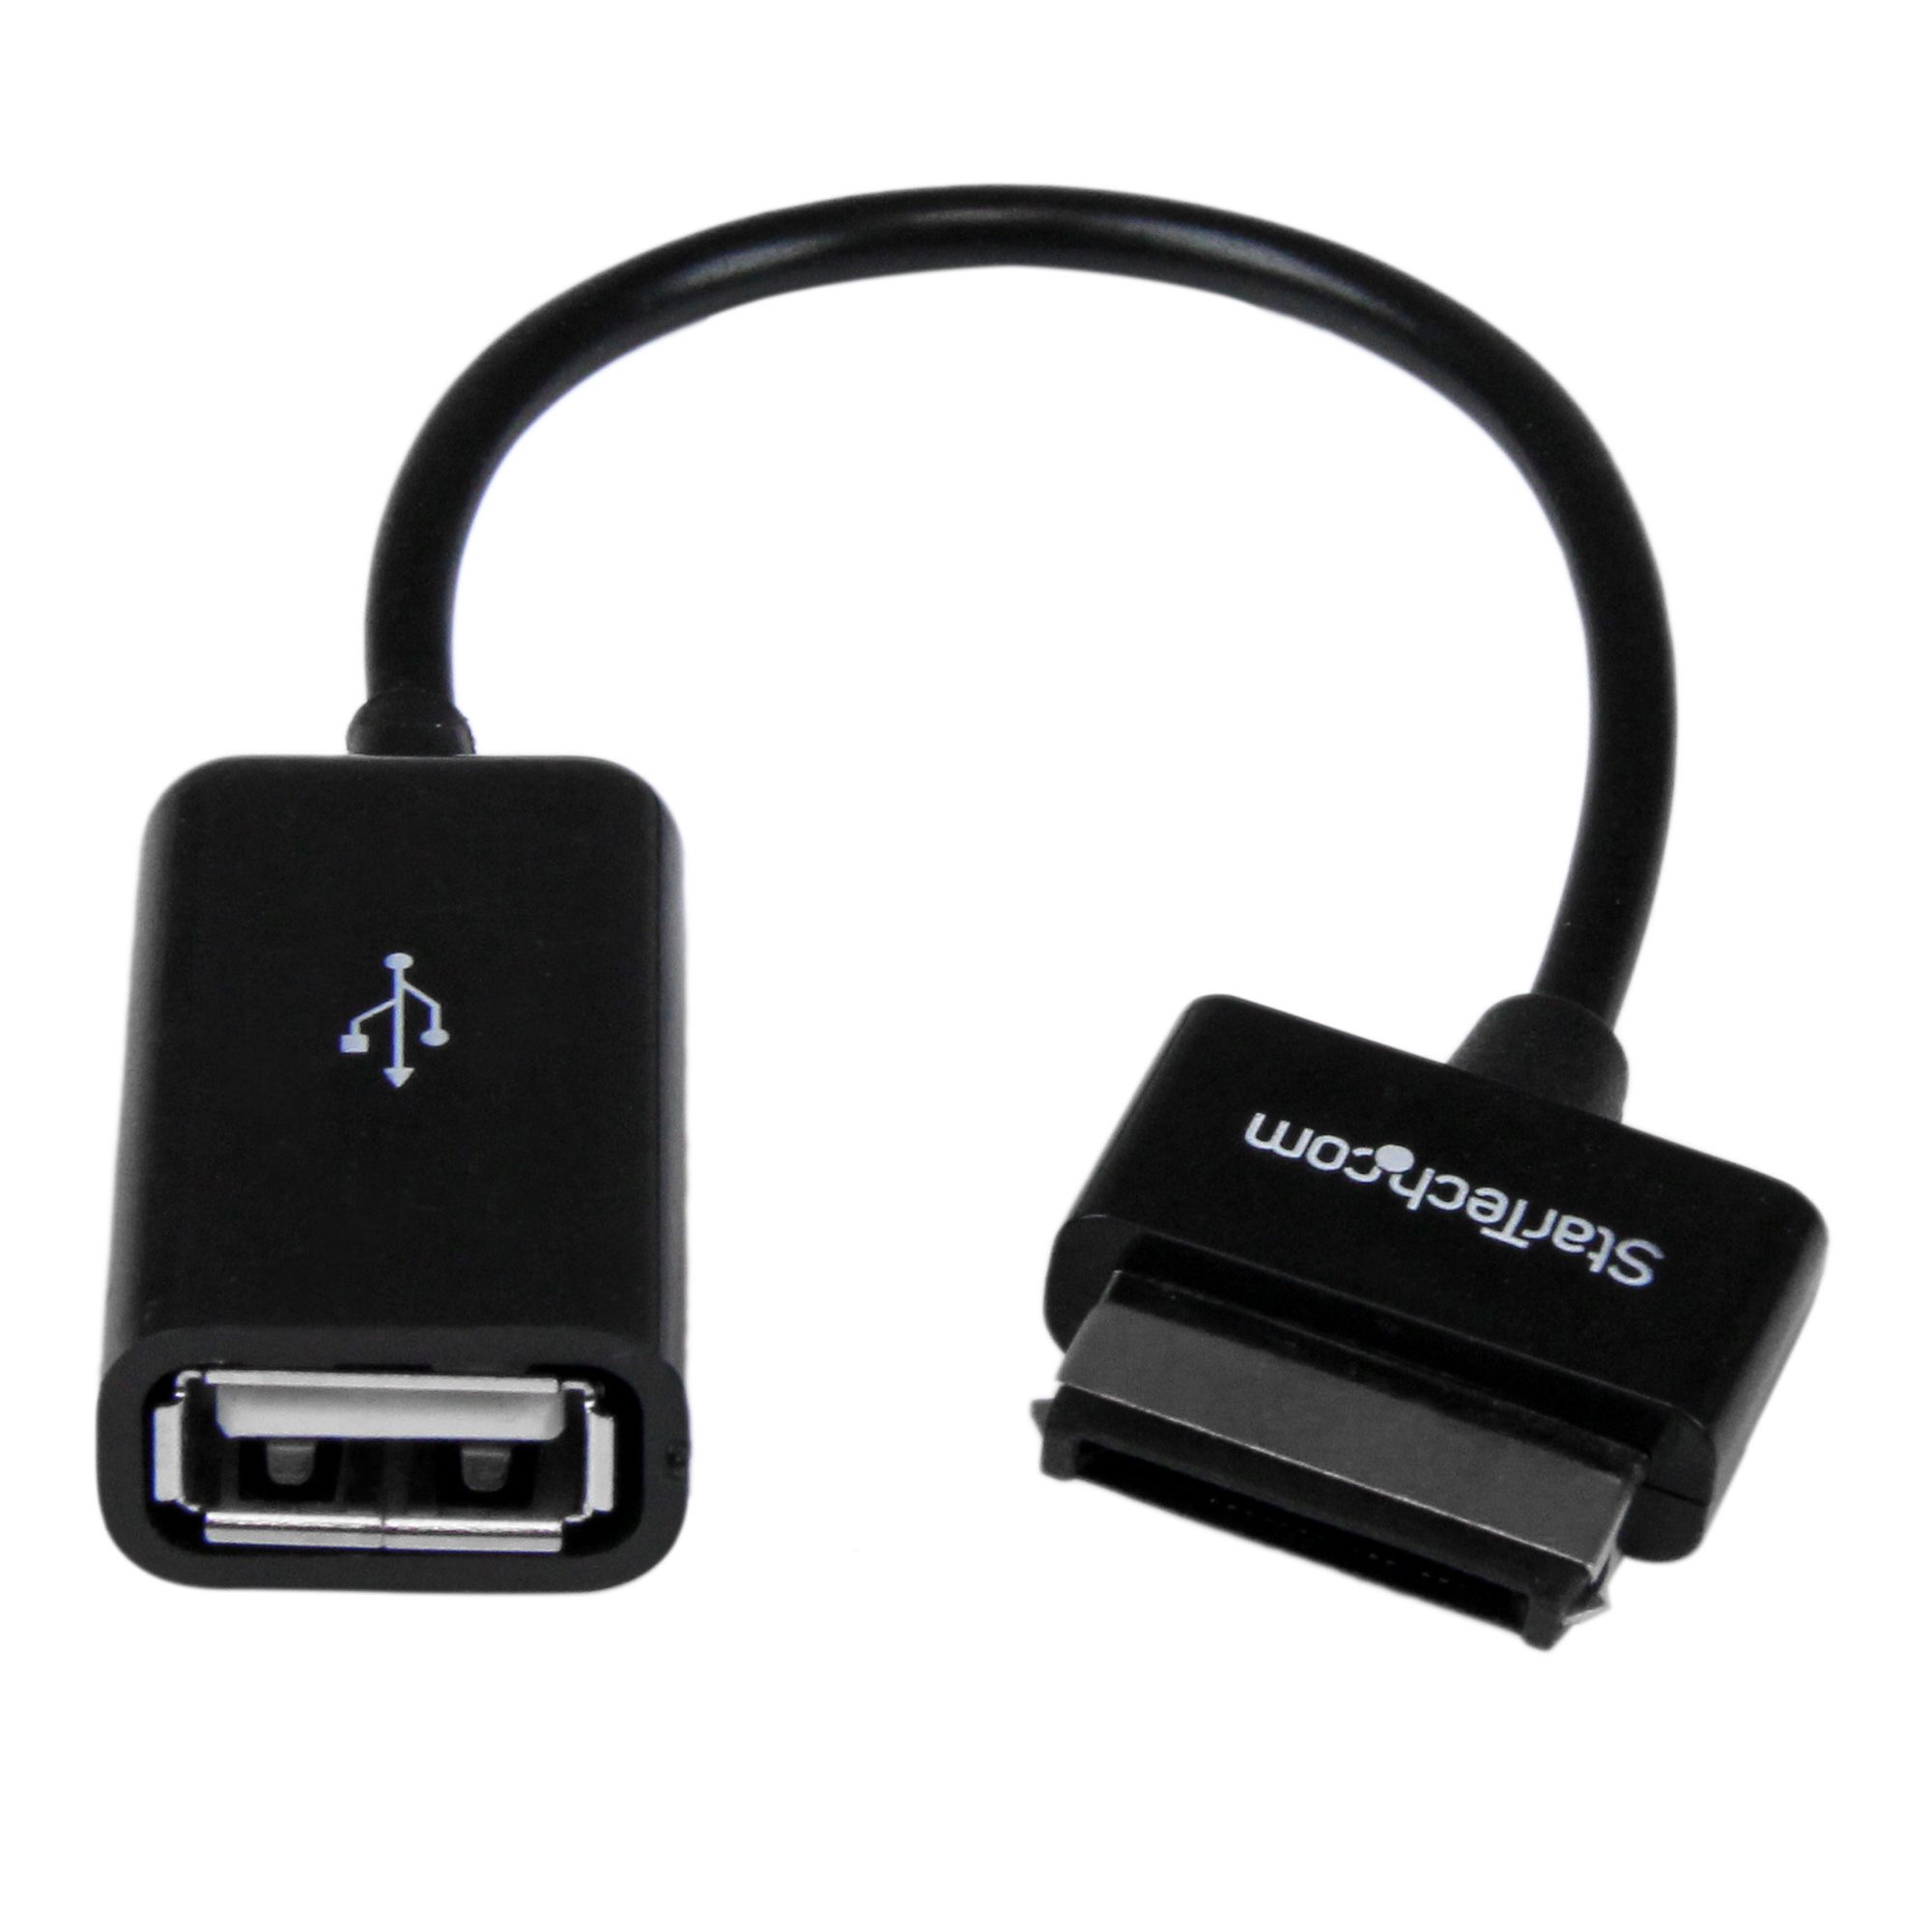 Cable OTG USB Asus Transformer Tablet - USB (USB 2.0) | StarTech.com España